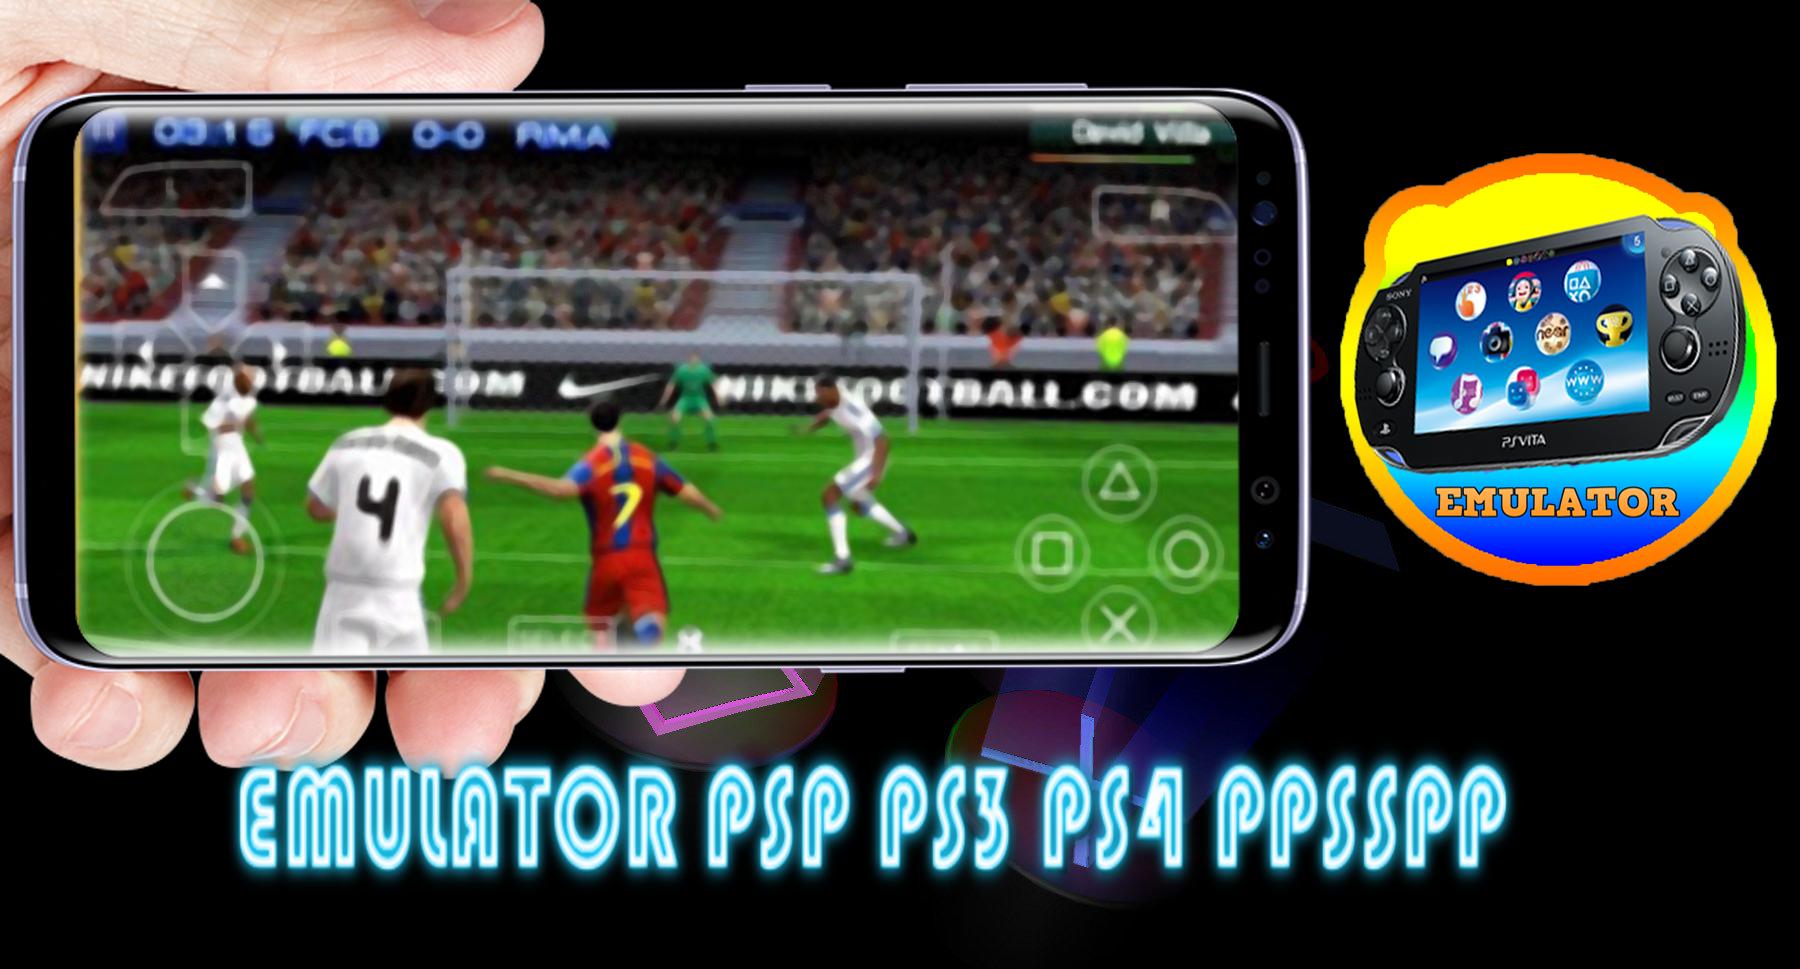 Games & Emulator PPSSPP for Android - APK Download